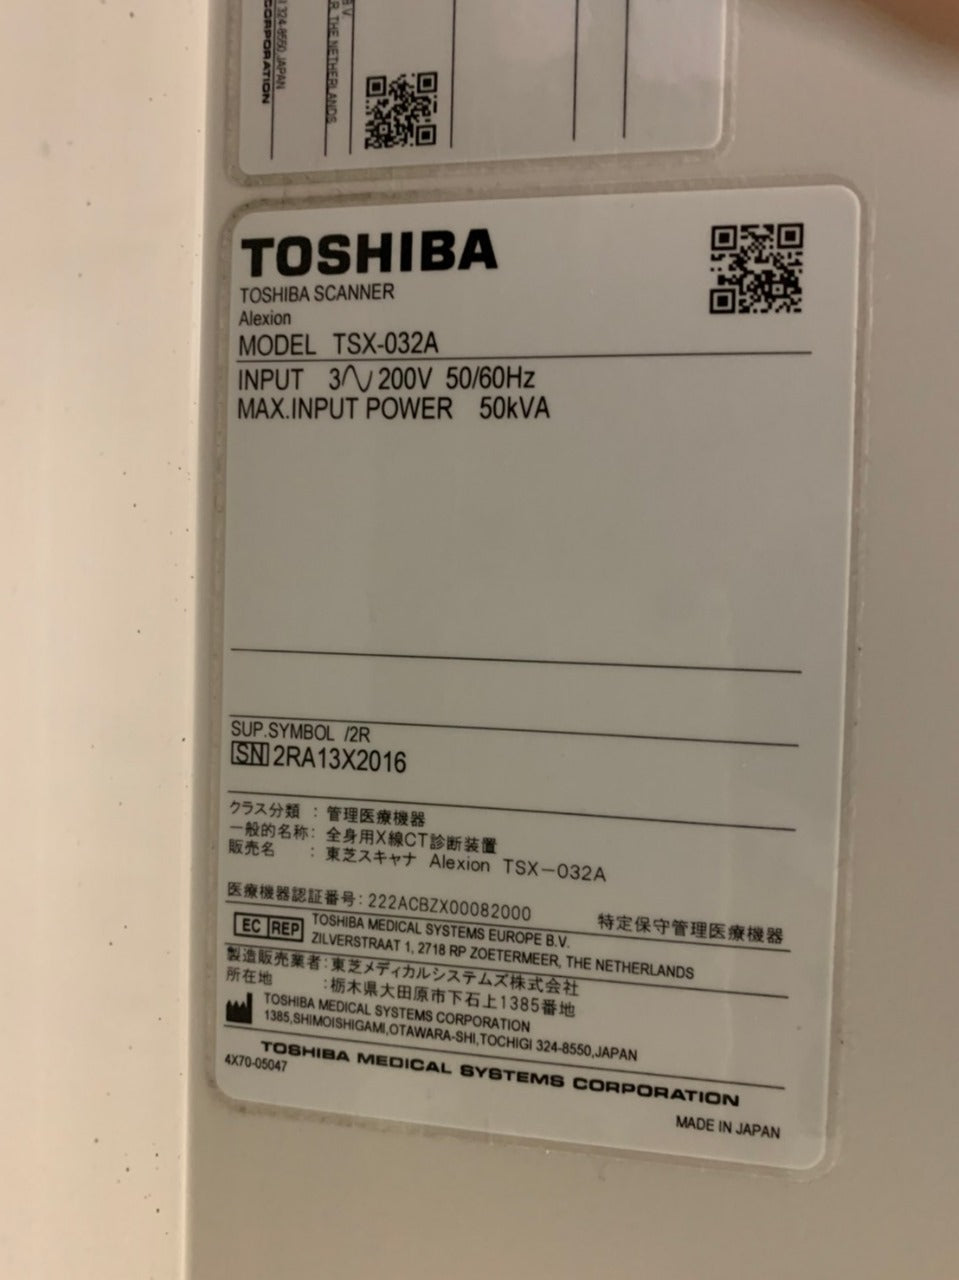 ◆ Toshiba Alexion 16
YOM : Oct, 2013
Tube Usage : 381228 Exp Count as of Jun, 2023
Software : V4.86JR006
Already de-installed